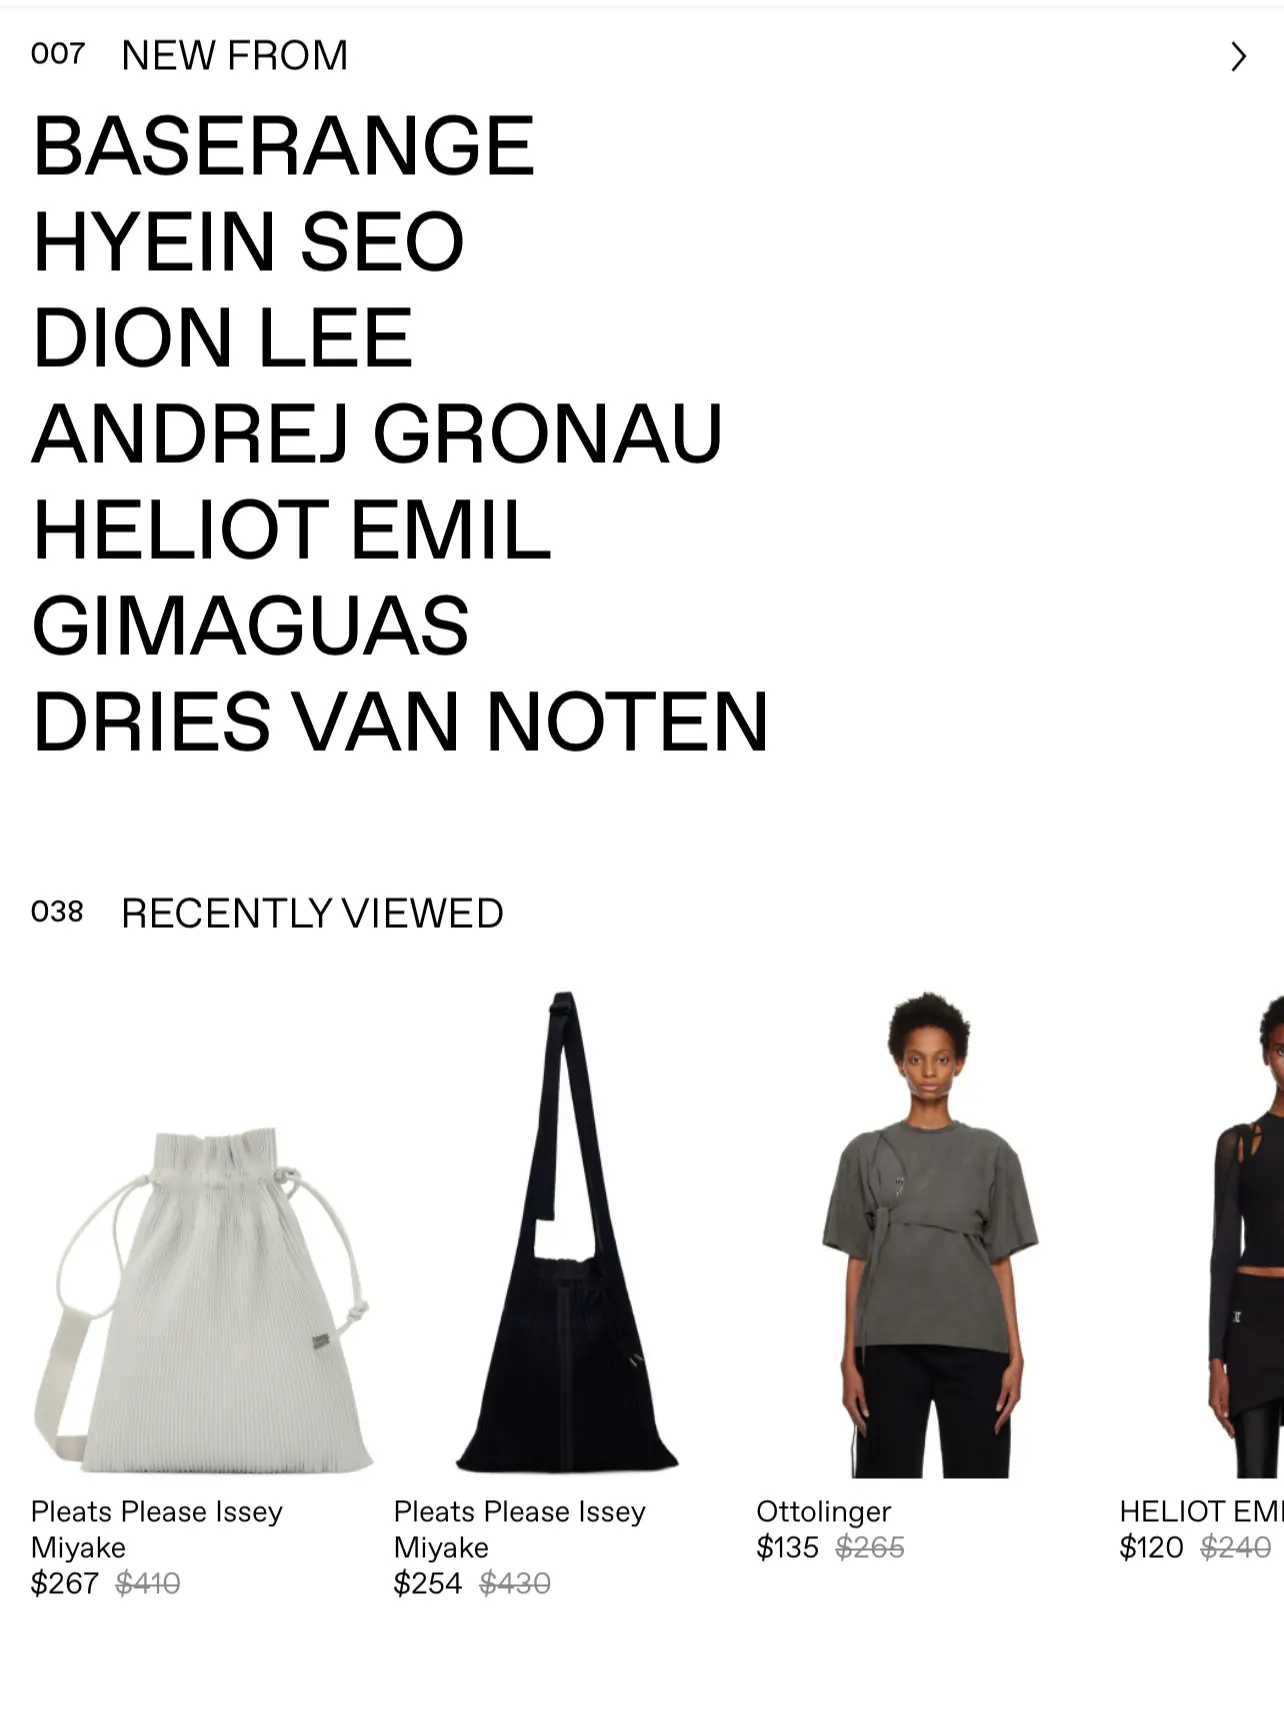 Chanel Gucci Dior LV Classic Style Designer Stretch Fabrics YJBY543 Brand  Fashions